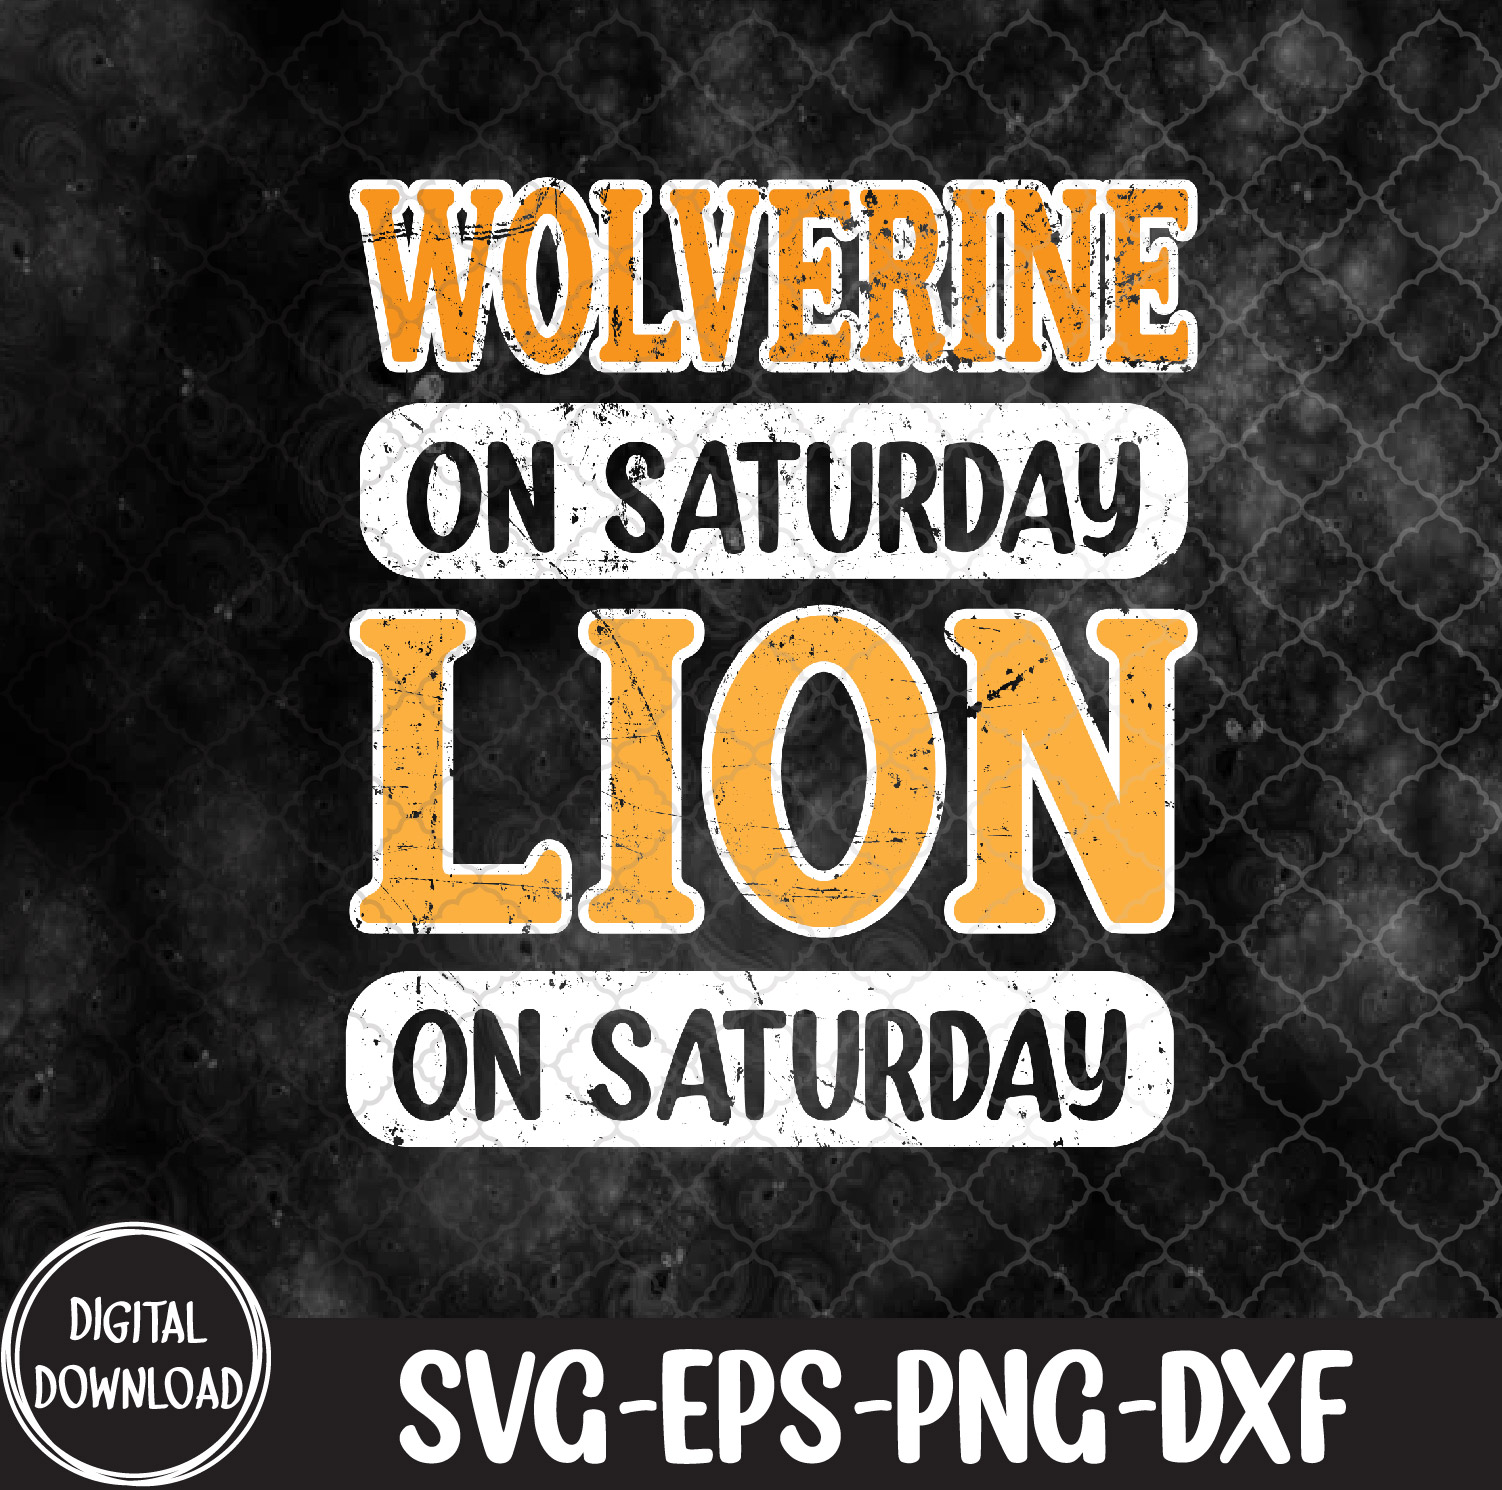 WTMNEW9file 09 5 Wolverine On Saturday Lion On Sunday Detroit svg, Svg, Eps, Png, Dxf